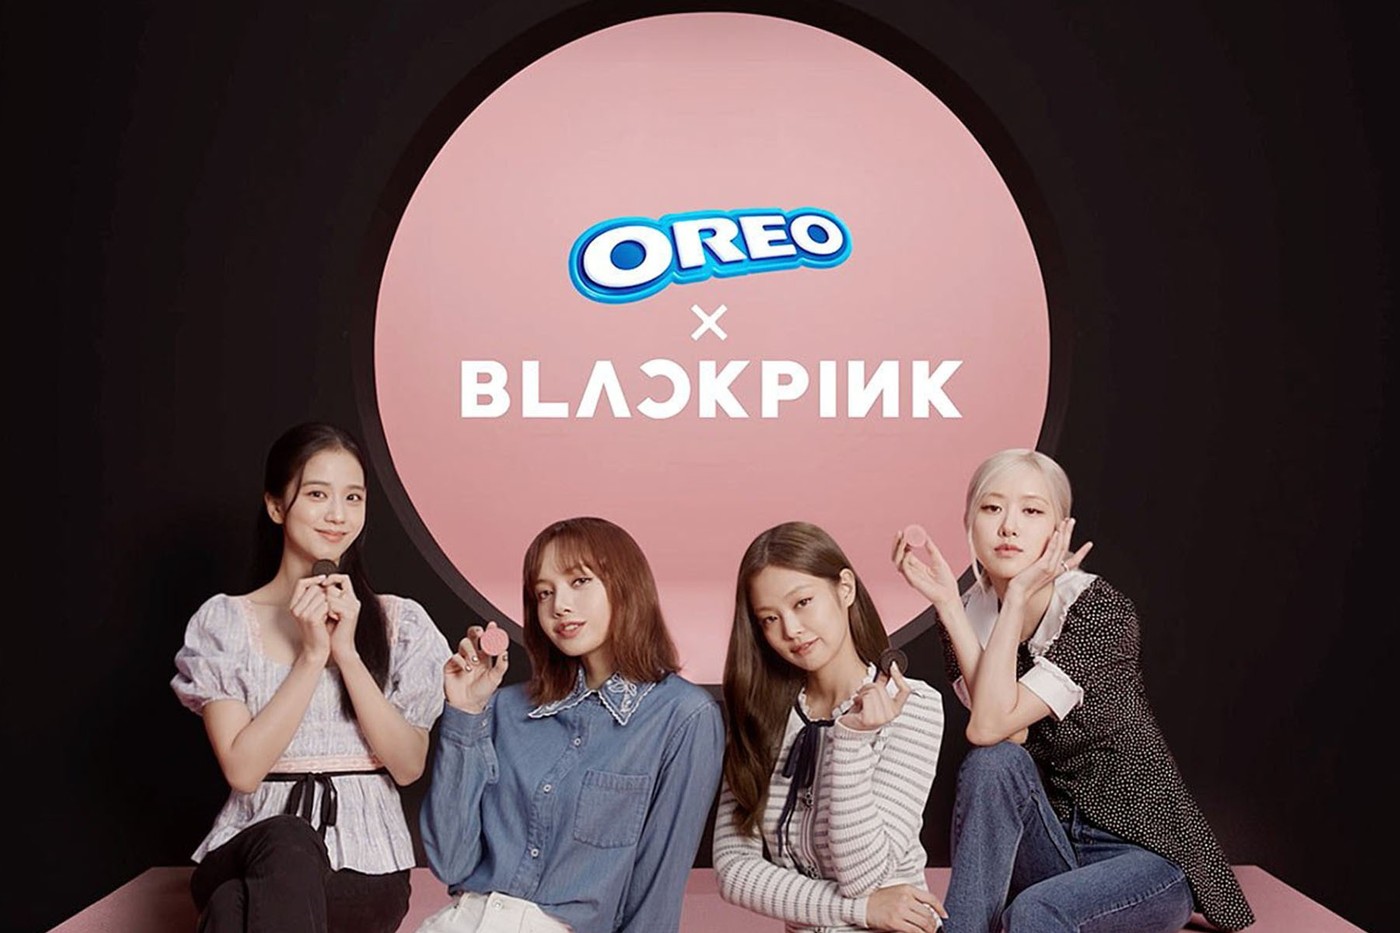 BLACKPINK × OREO 最新联名「粉黑夹心饼干」形象广告正式出炉